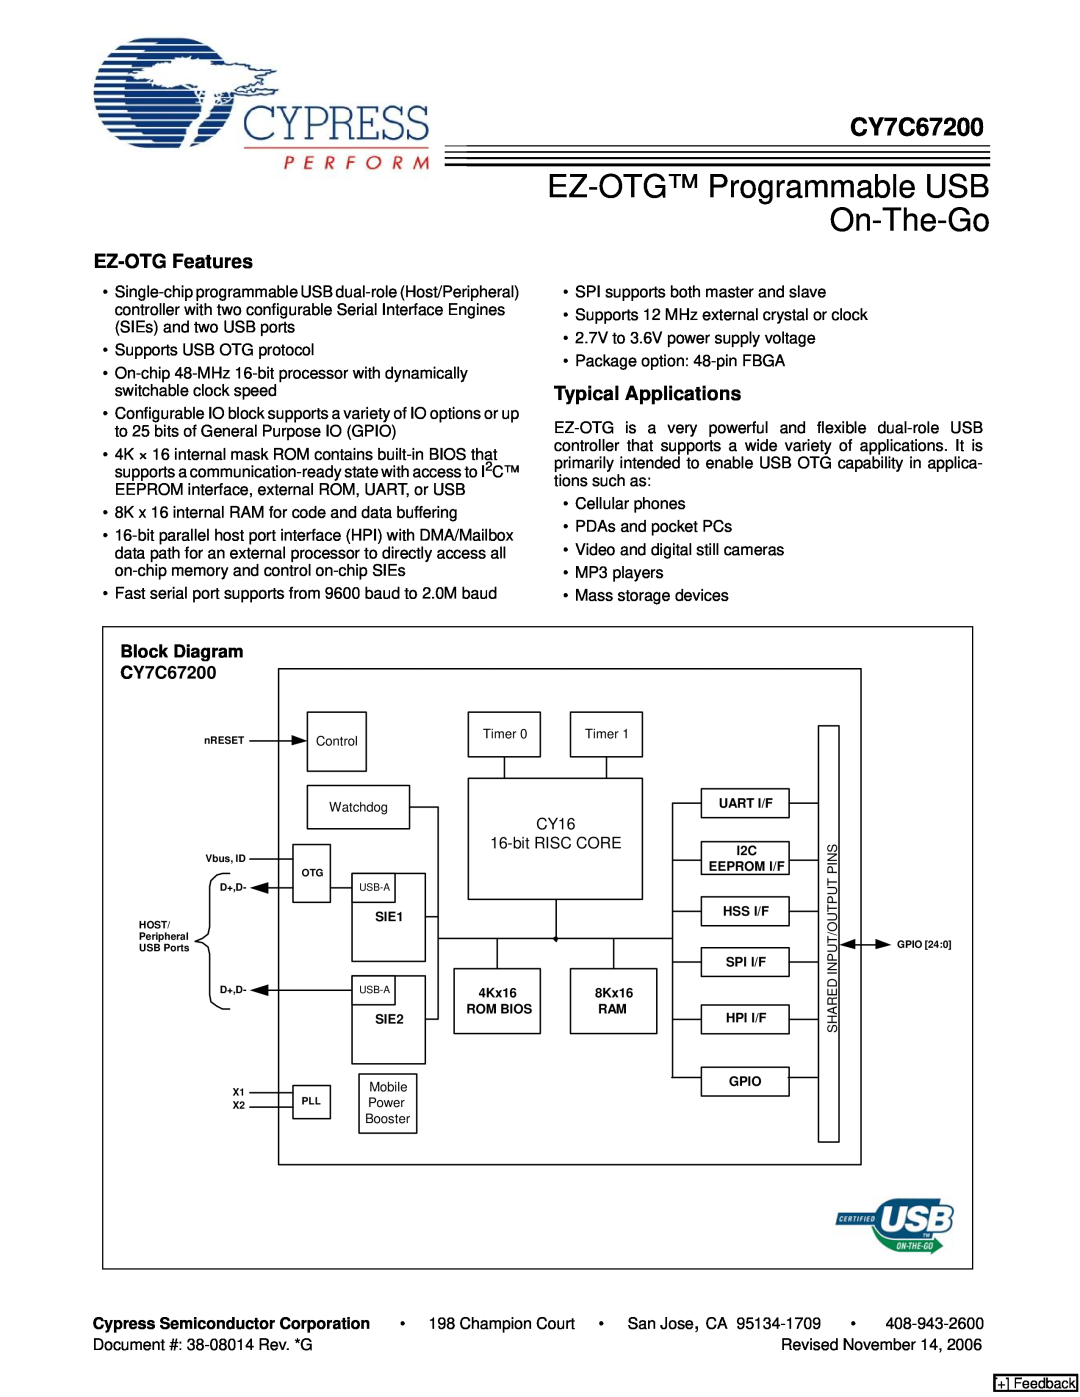 Cypress CY7C67200 manual EZ-OTG Features, Typical Applications, EZ-OTG Programmable USB On-The-Go, Block Diagram 